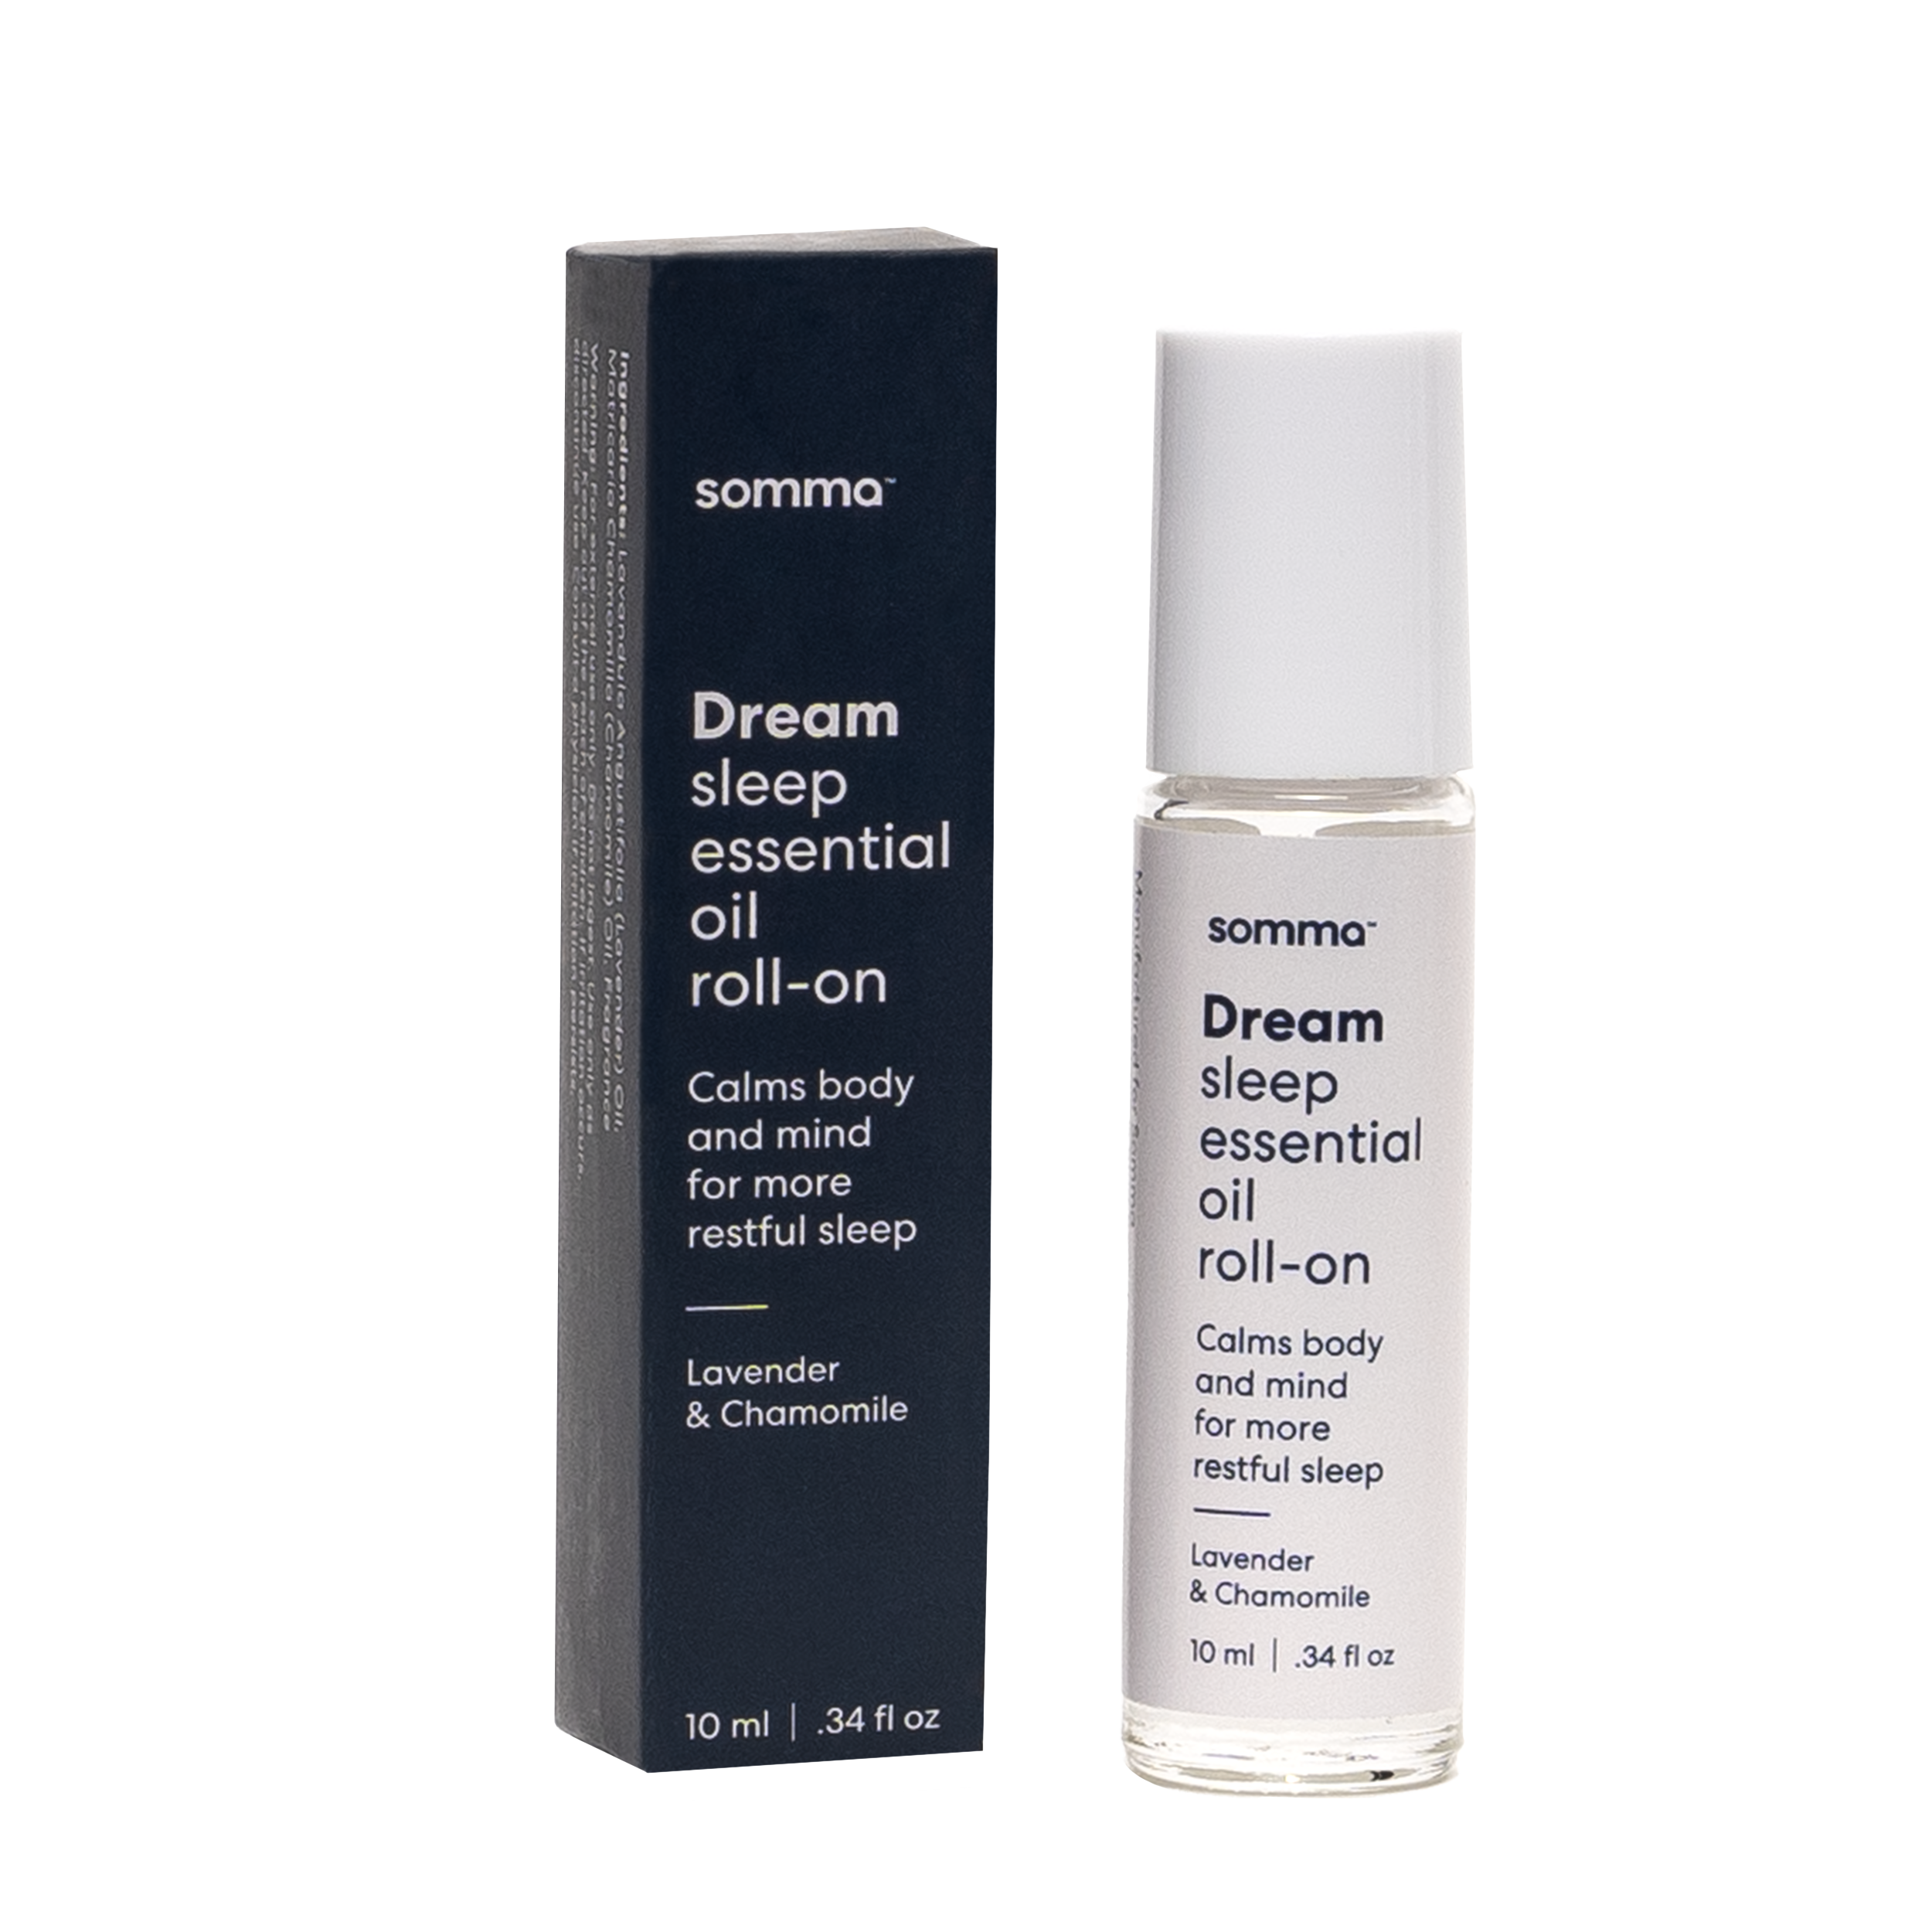 somma dream sleep essential oil roll-on